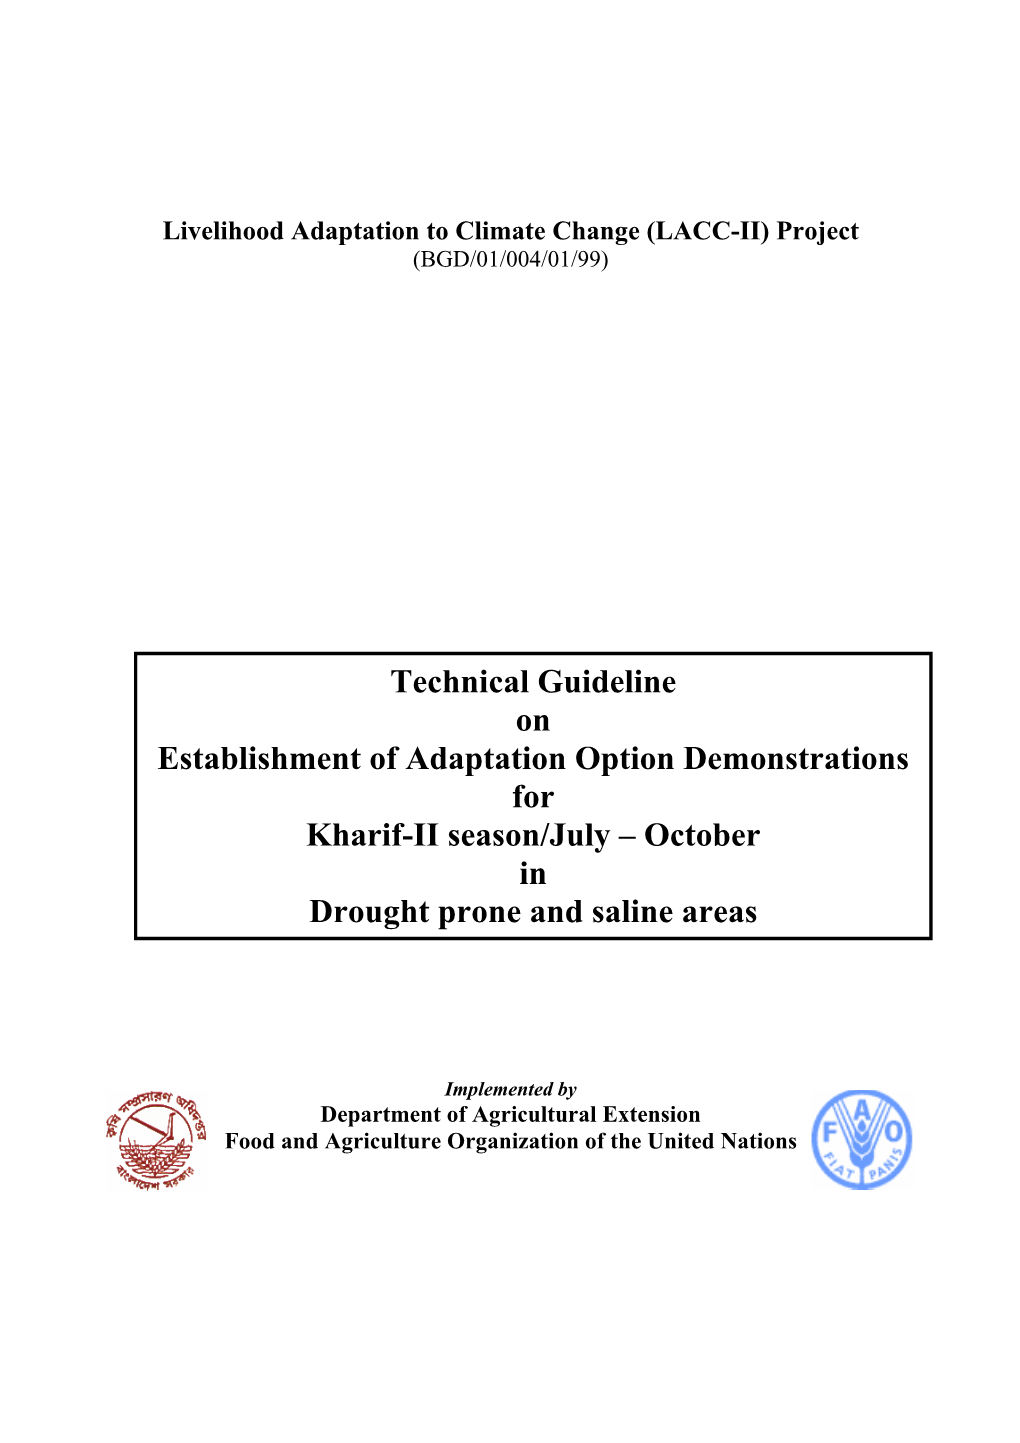 Technical Guideline on Establishment of Adaptation Option Demonstrations for Kharif-II Season/July – October